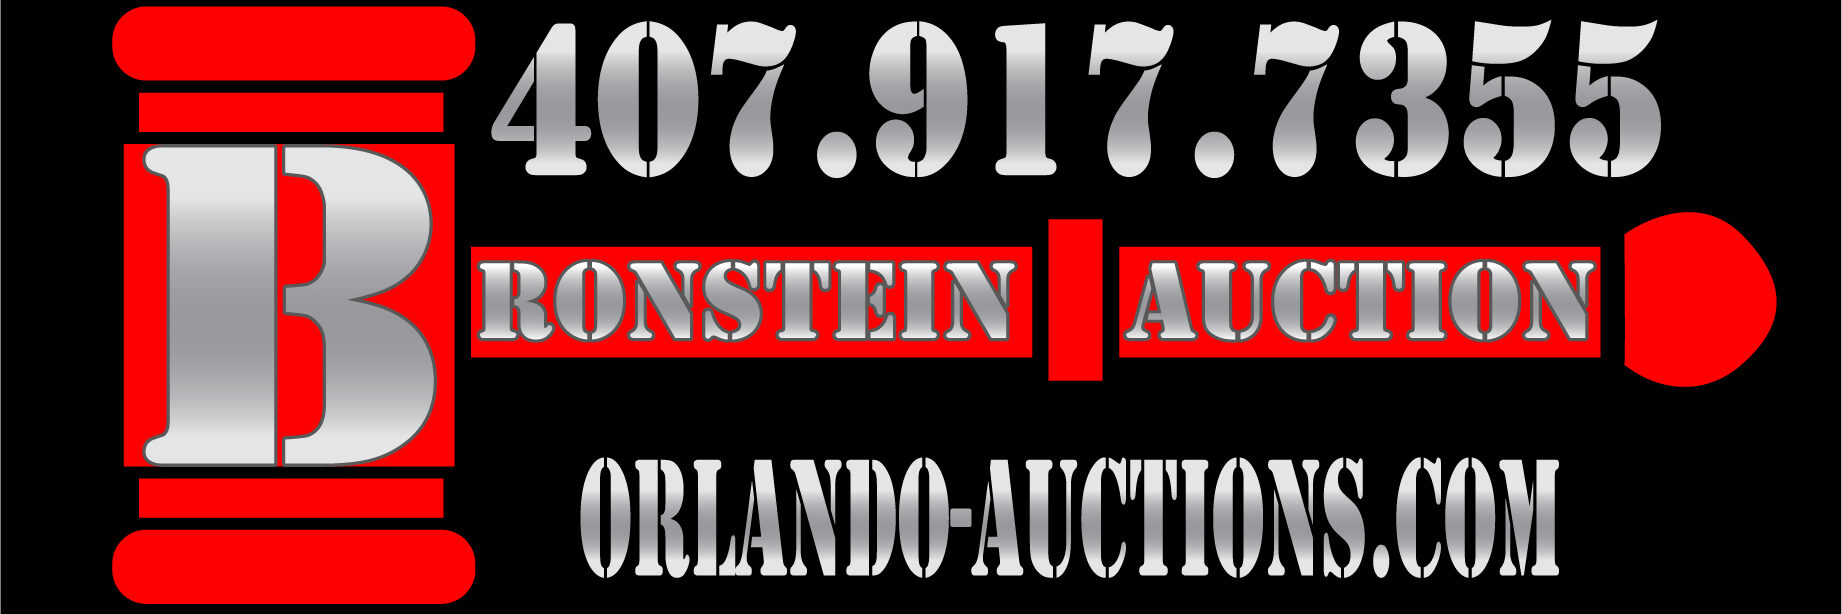 Bronstein Auction Co